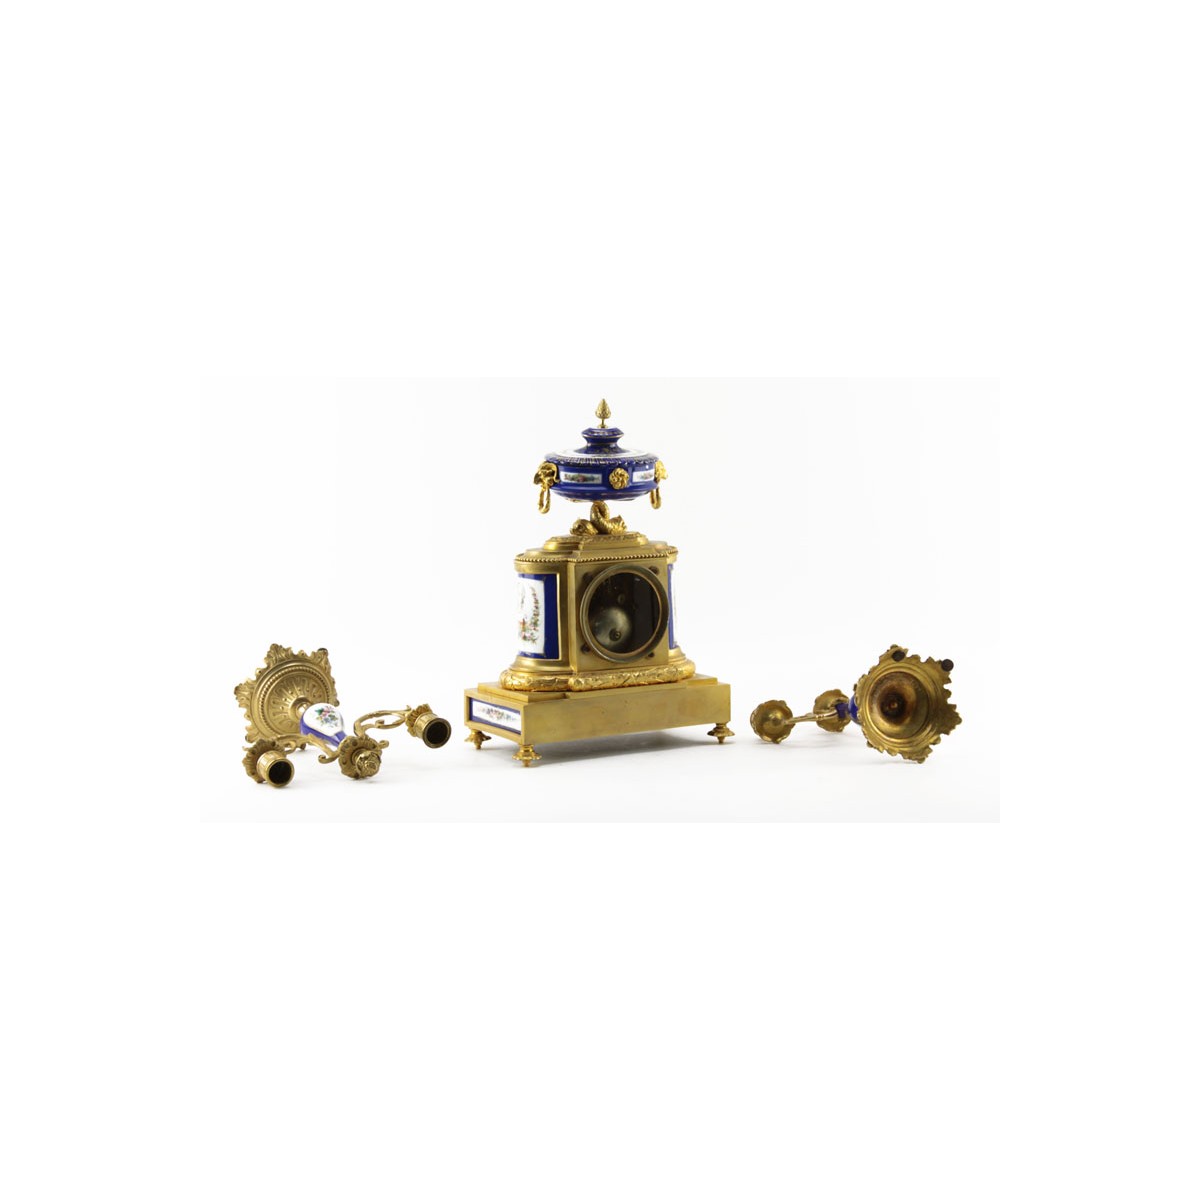 Antique French Louis XVI Style Clock Set